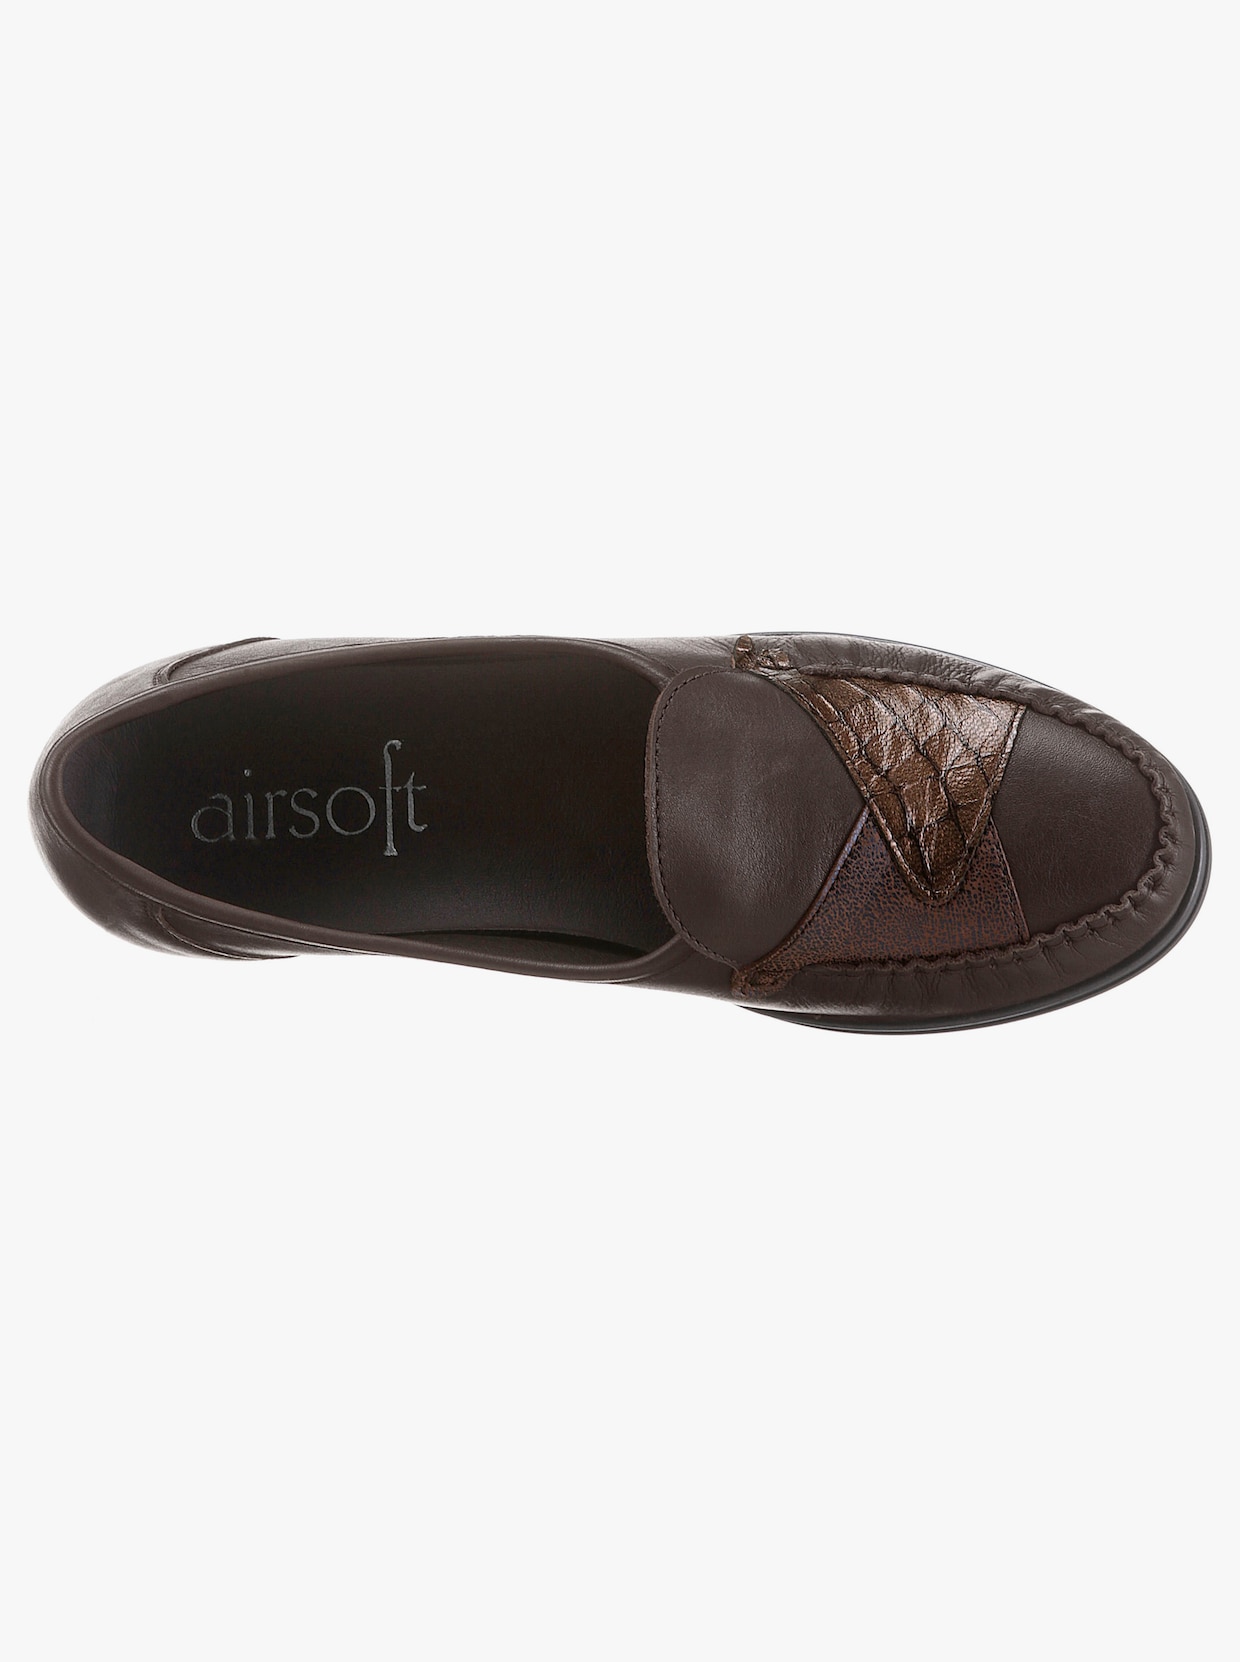 airsoft comfort+ Mocassins - bruin